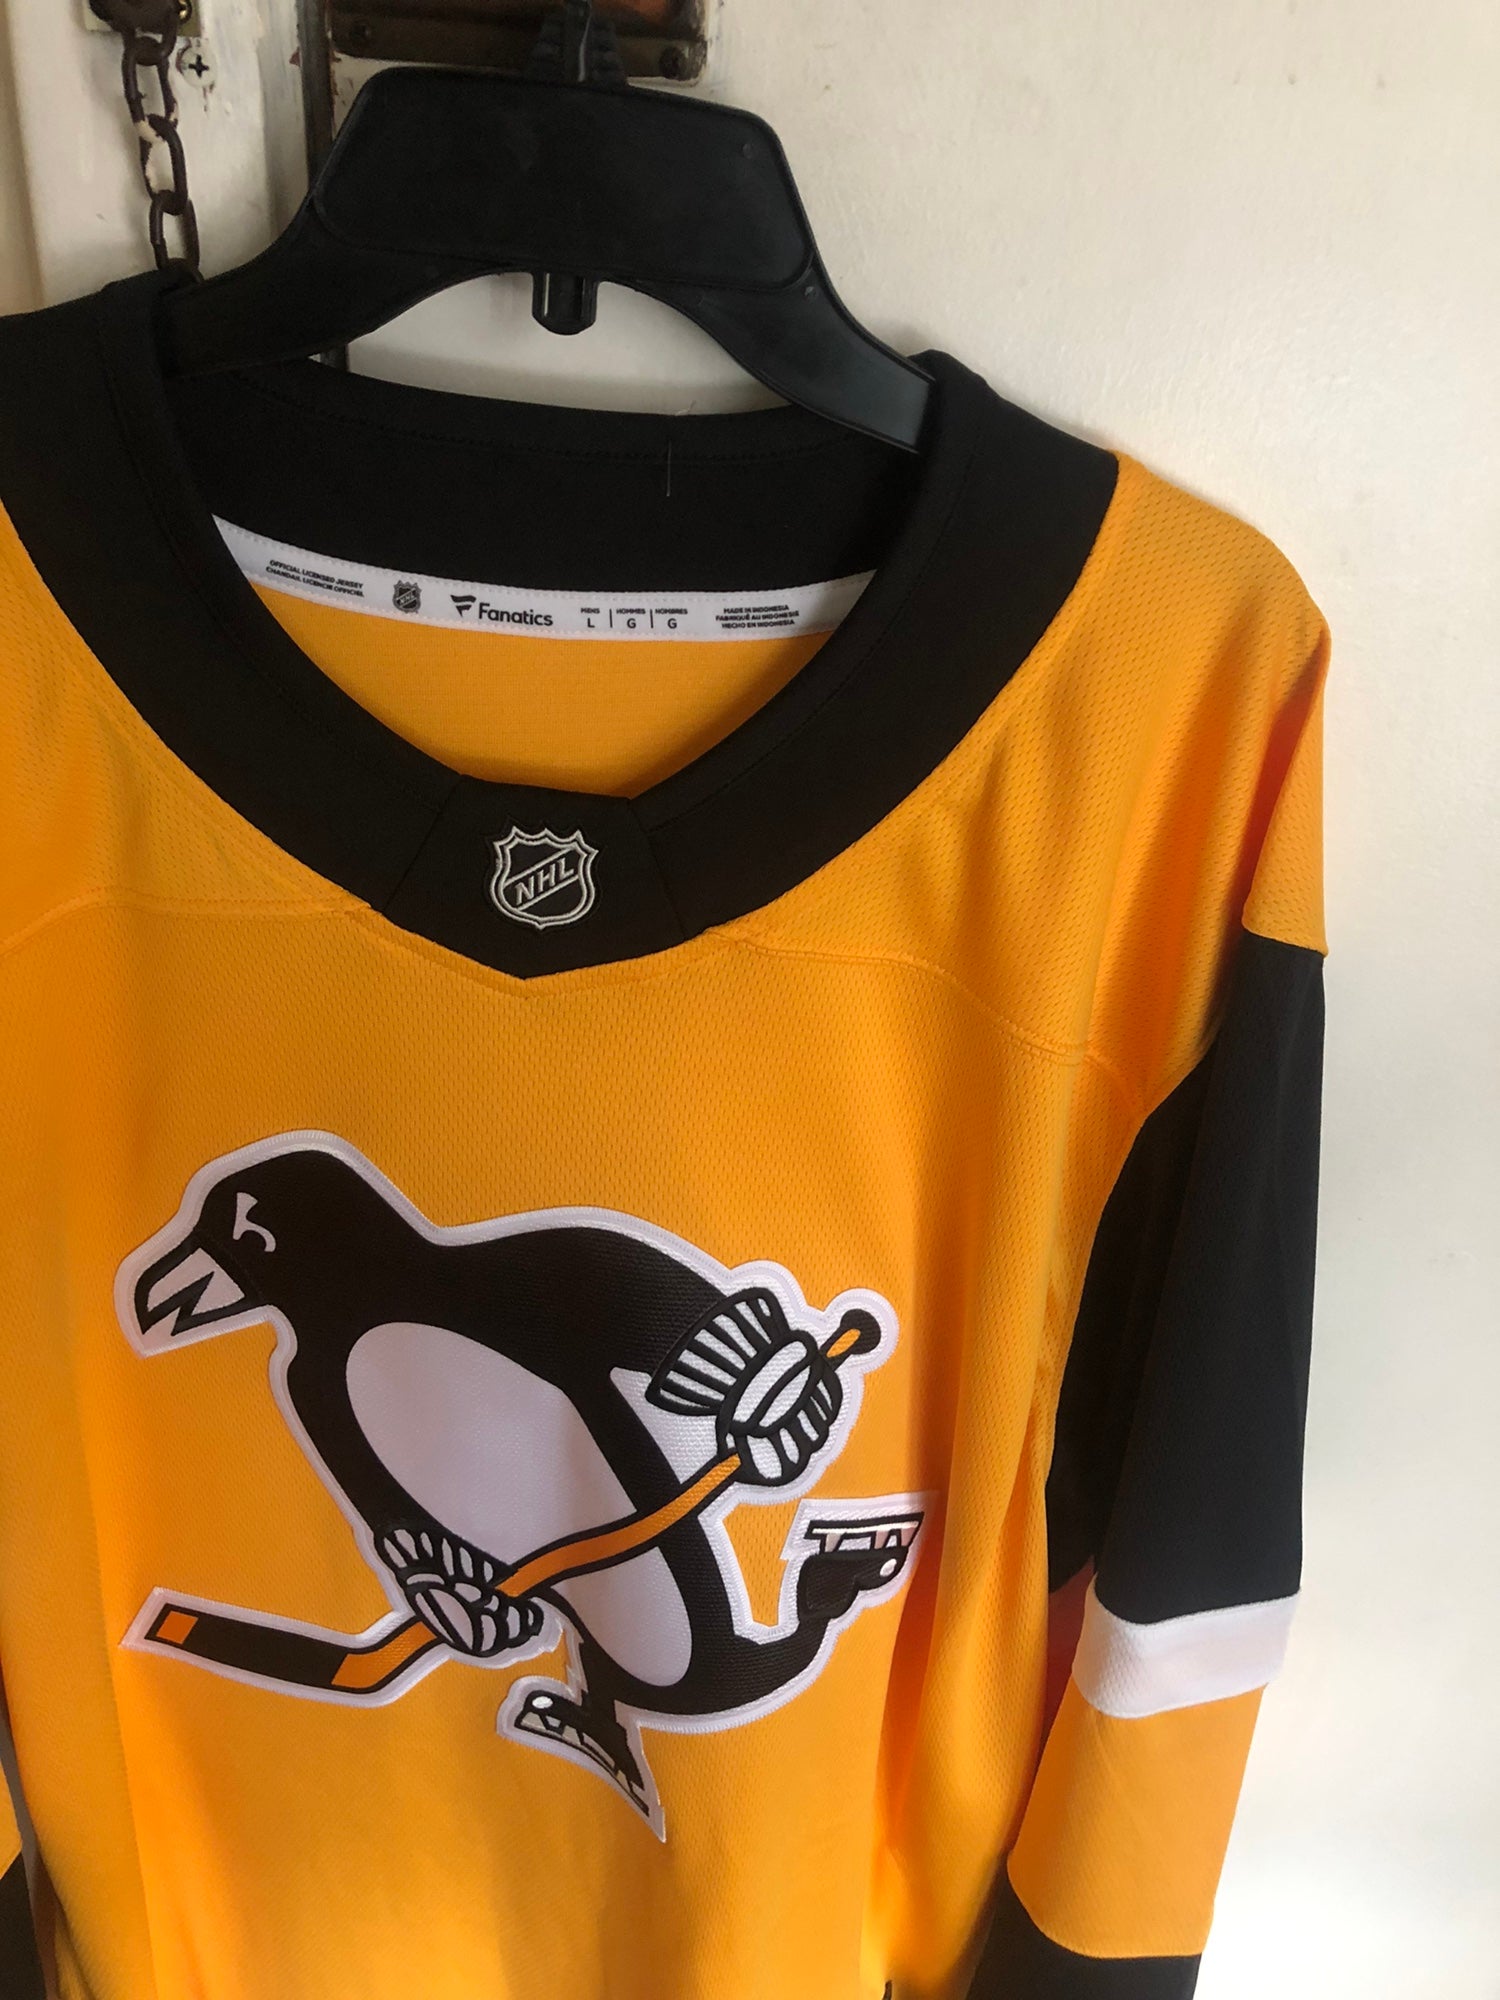 Fanatics Branded Men's Black Pittsburgh Penguins Premier Breakaway Heritage Blank Jersey - Black